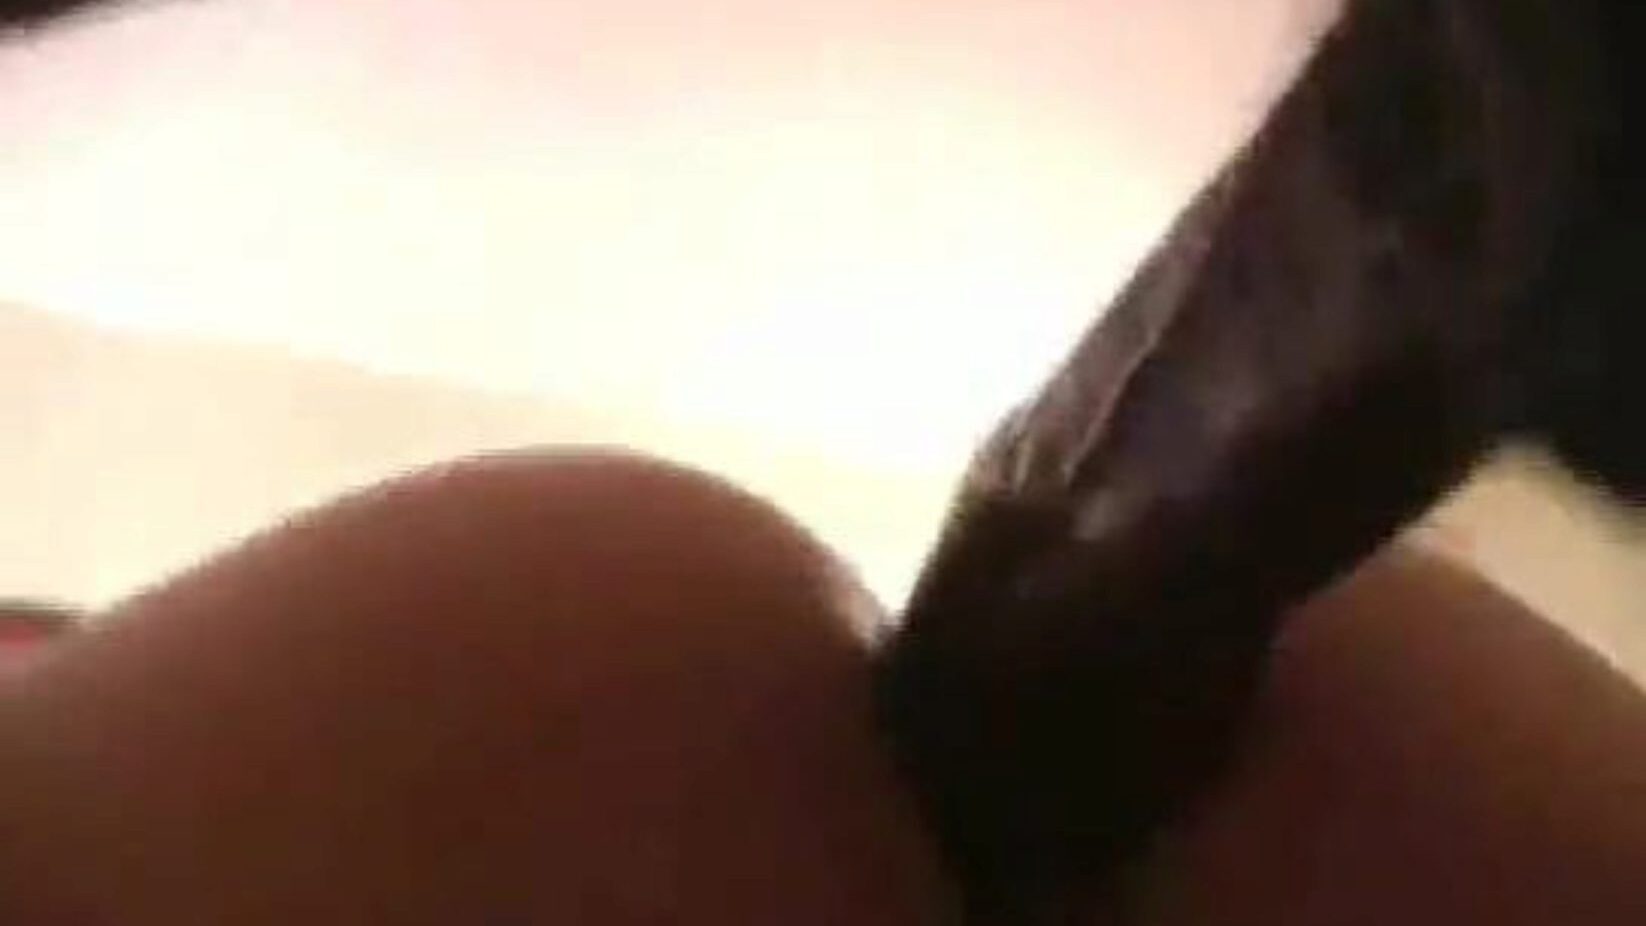 Wife gets her gazoo inserted by large black weenie